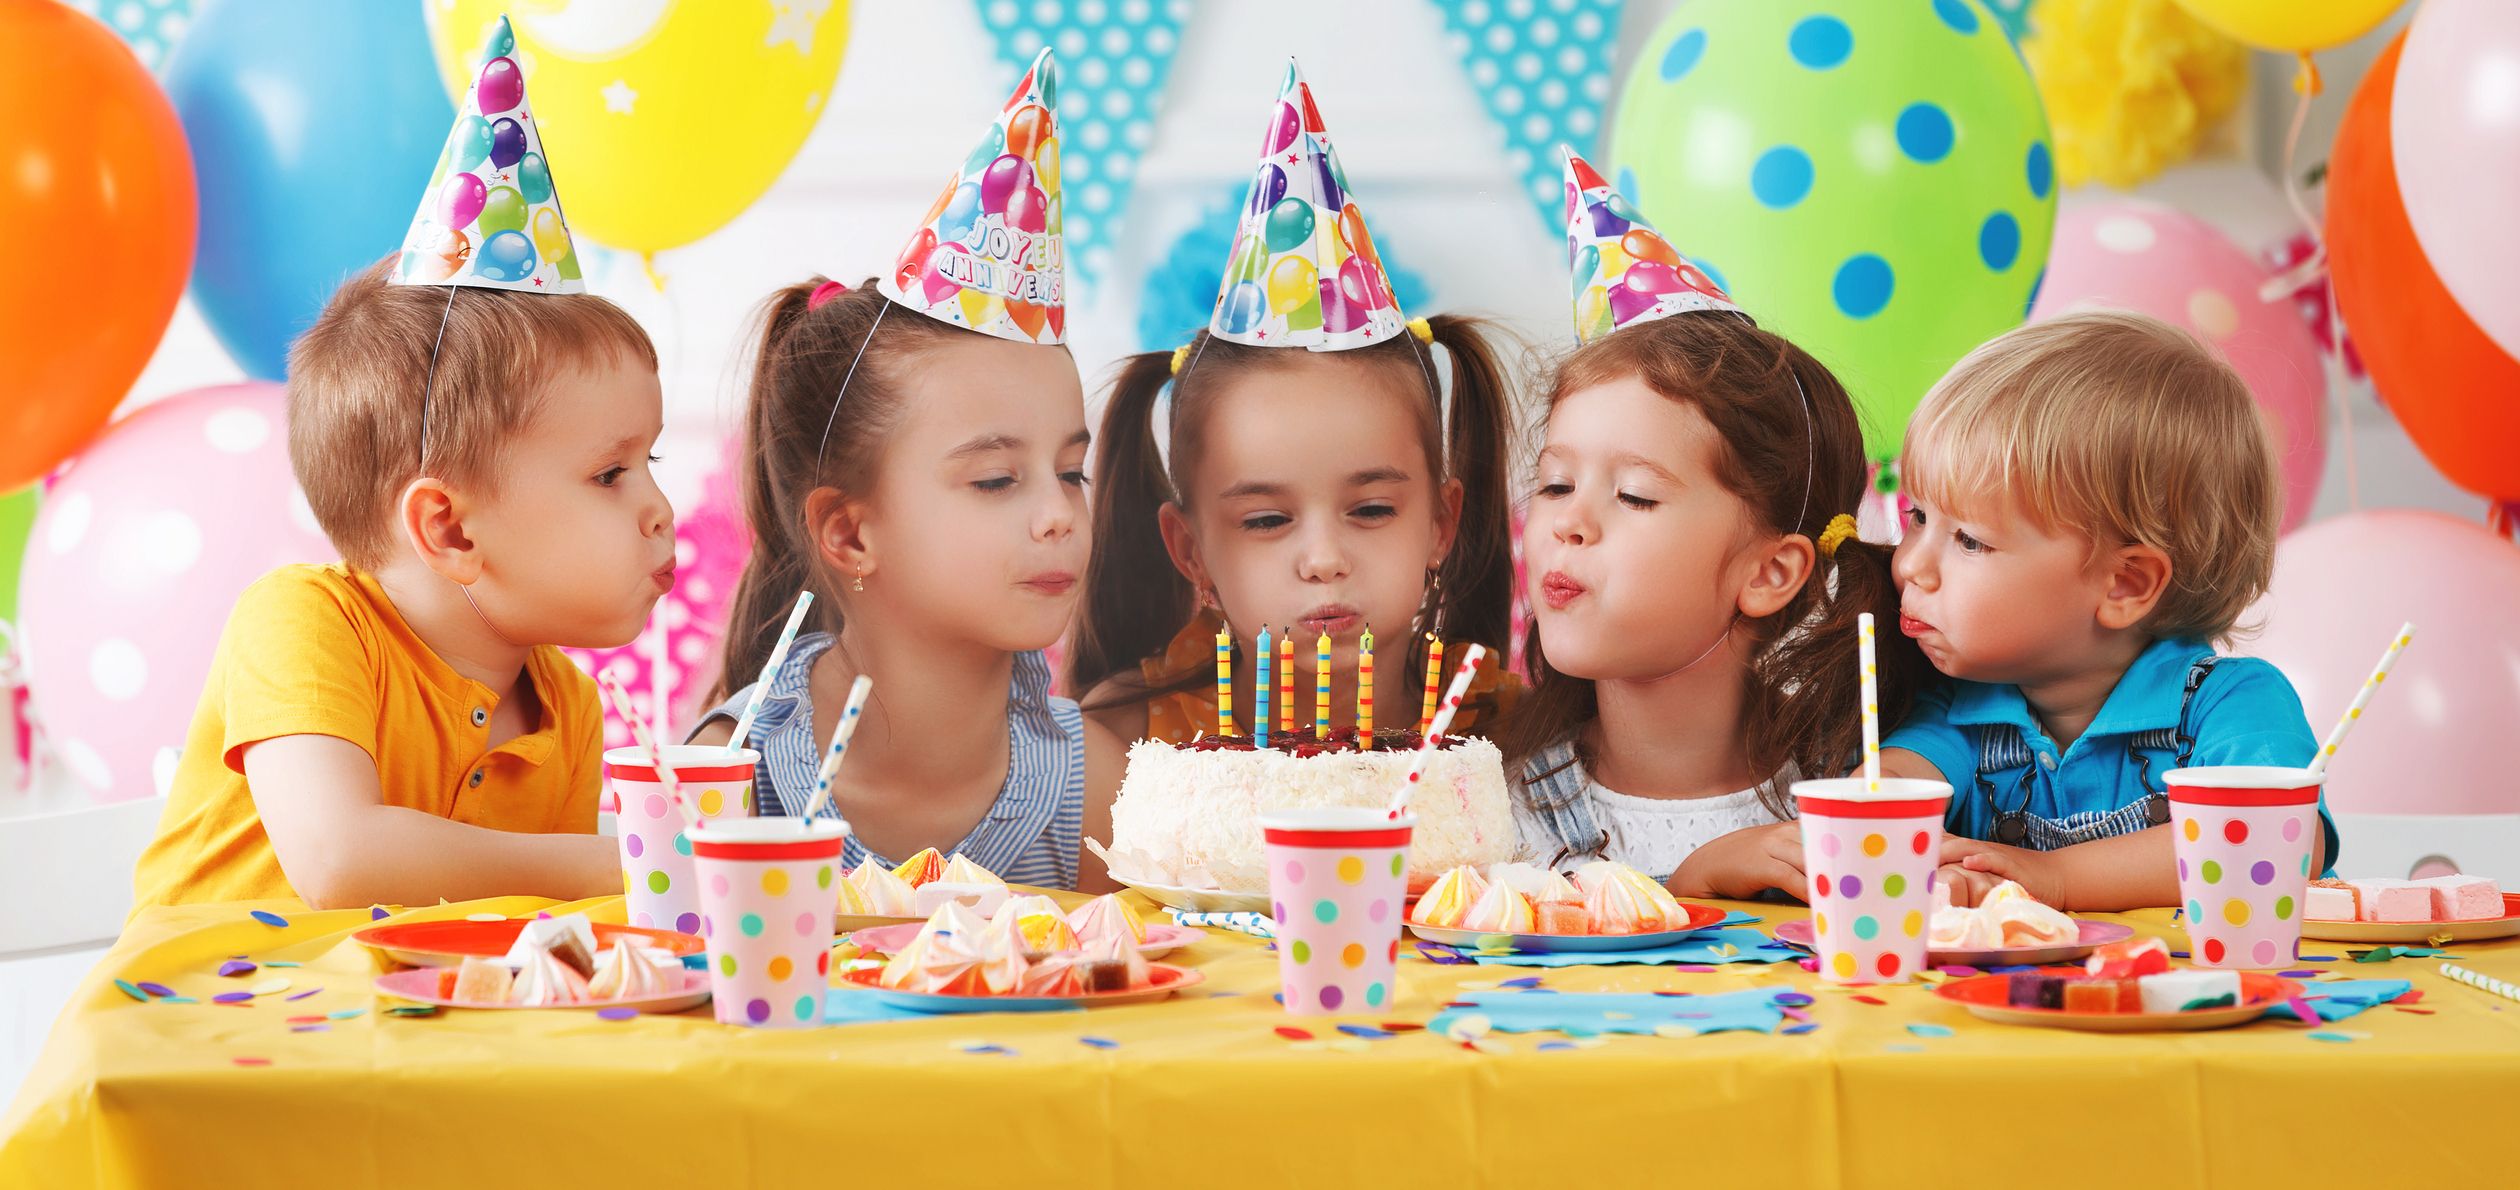 childrens-birthday-happy-kids-with-cake-royalty-free-image-1027350578-1553005949.jpg